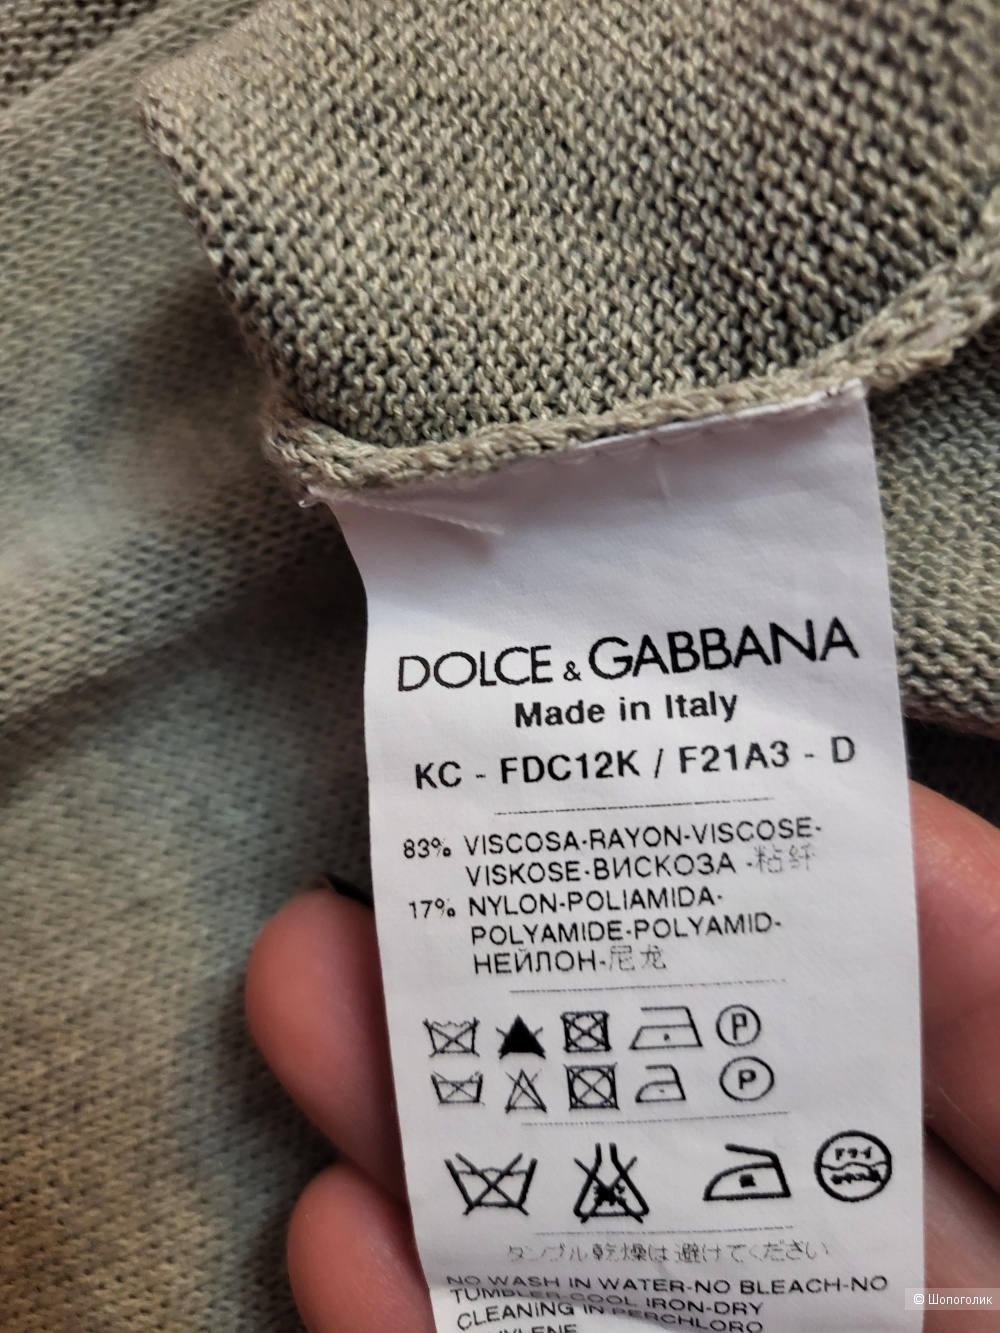 Кардиган Dolce&Gabbana, it.44 на 44-46